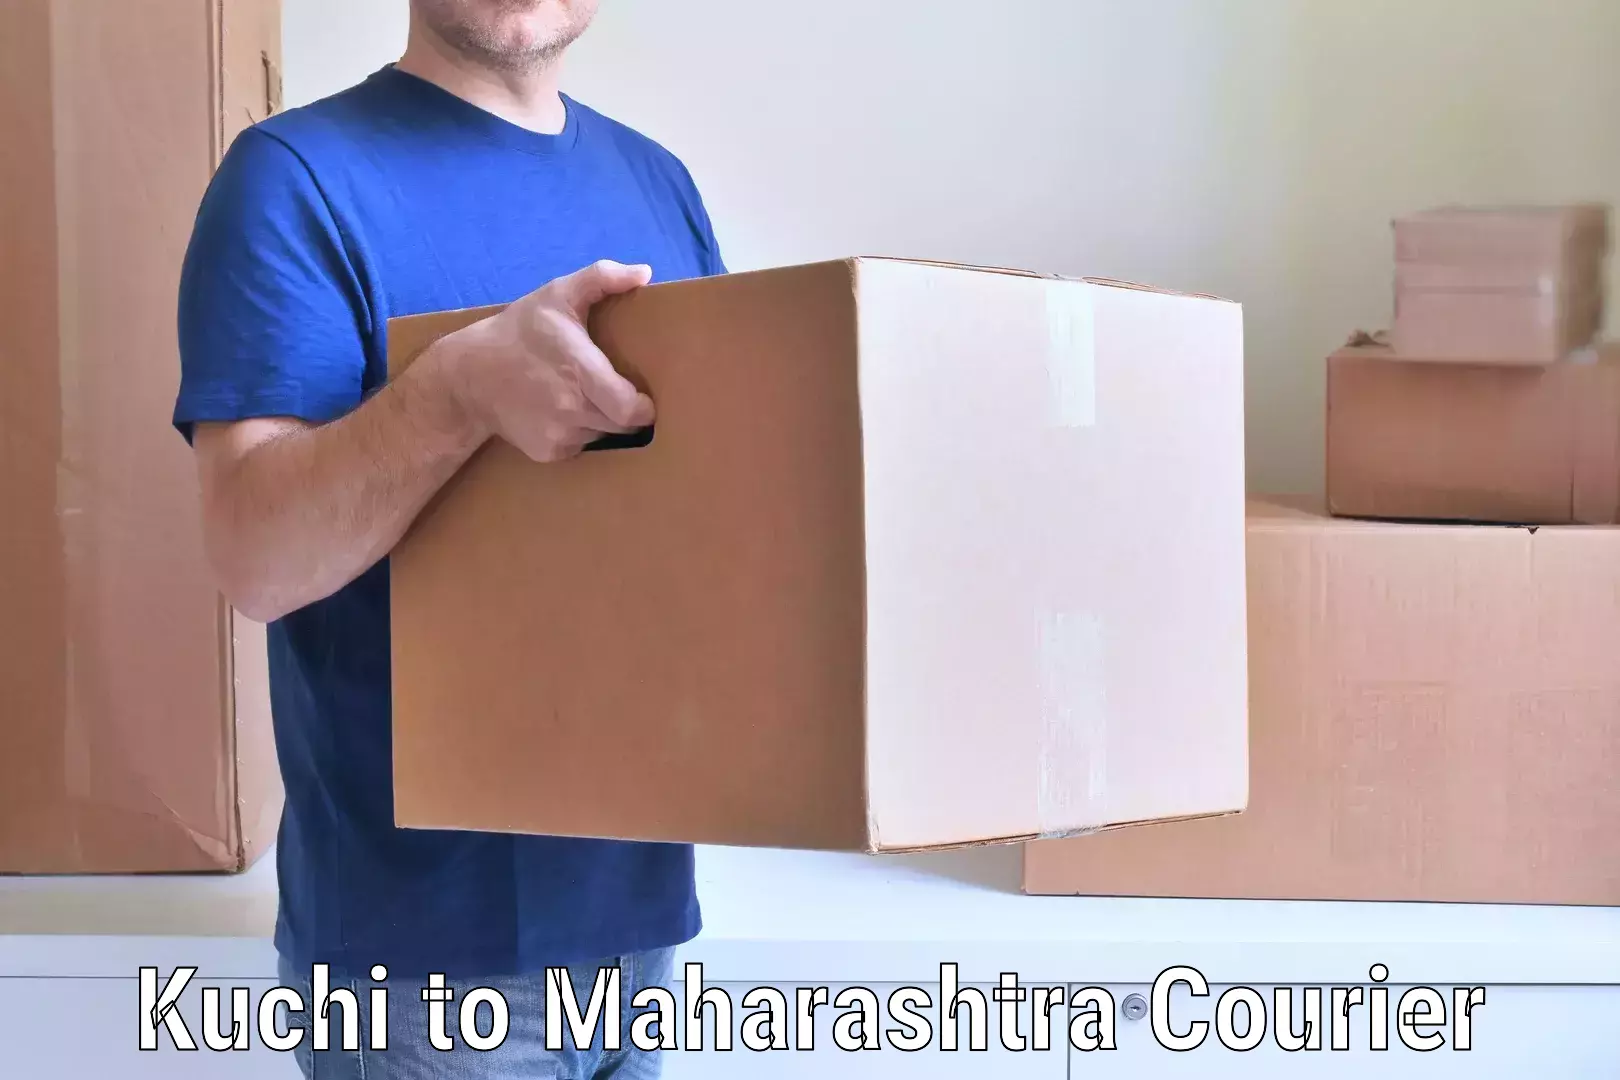 Furniture delivery service Kuchi to Maharashtra